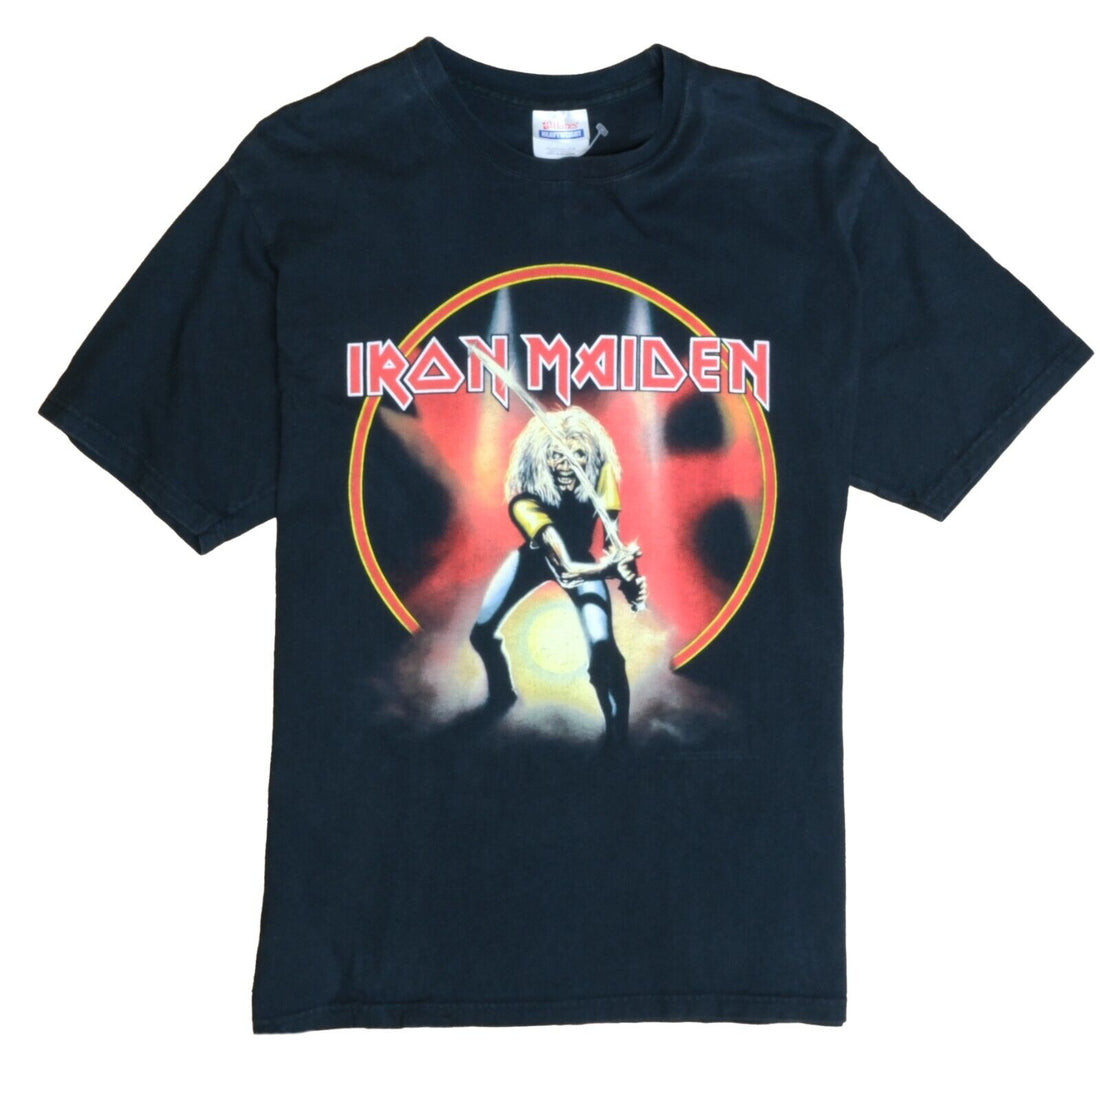 Vintage Iron Maiden Japan T-Shirt Size Size Medium Black Band Tee